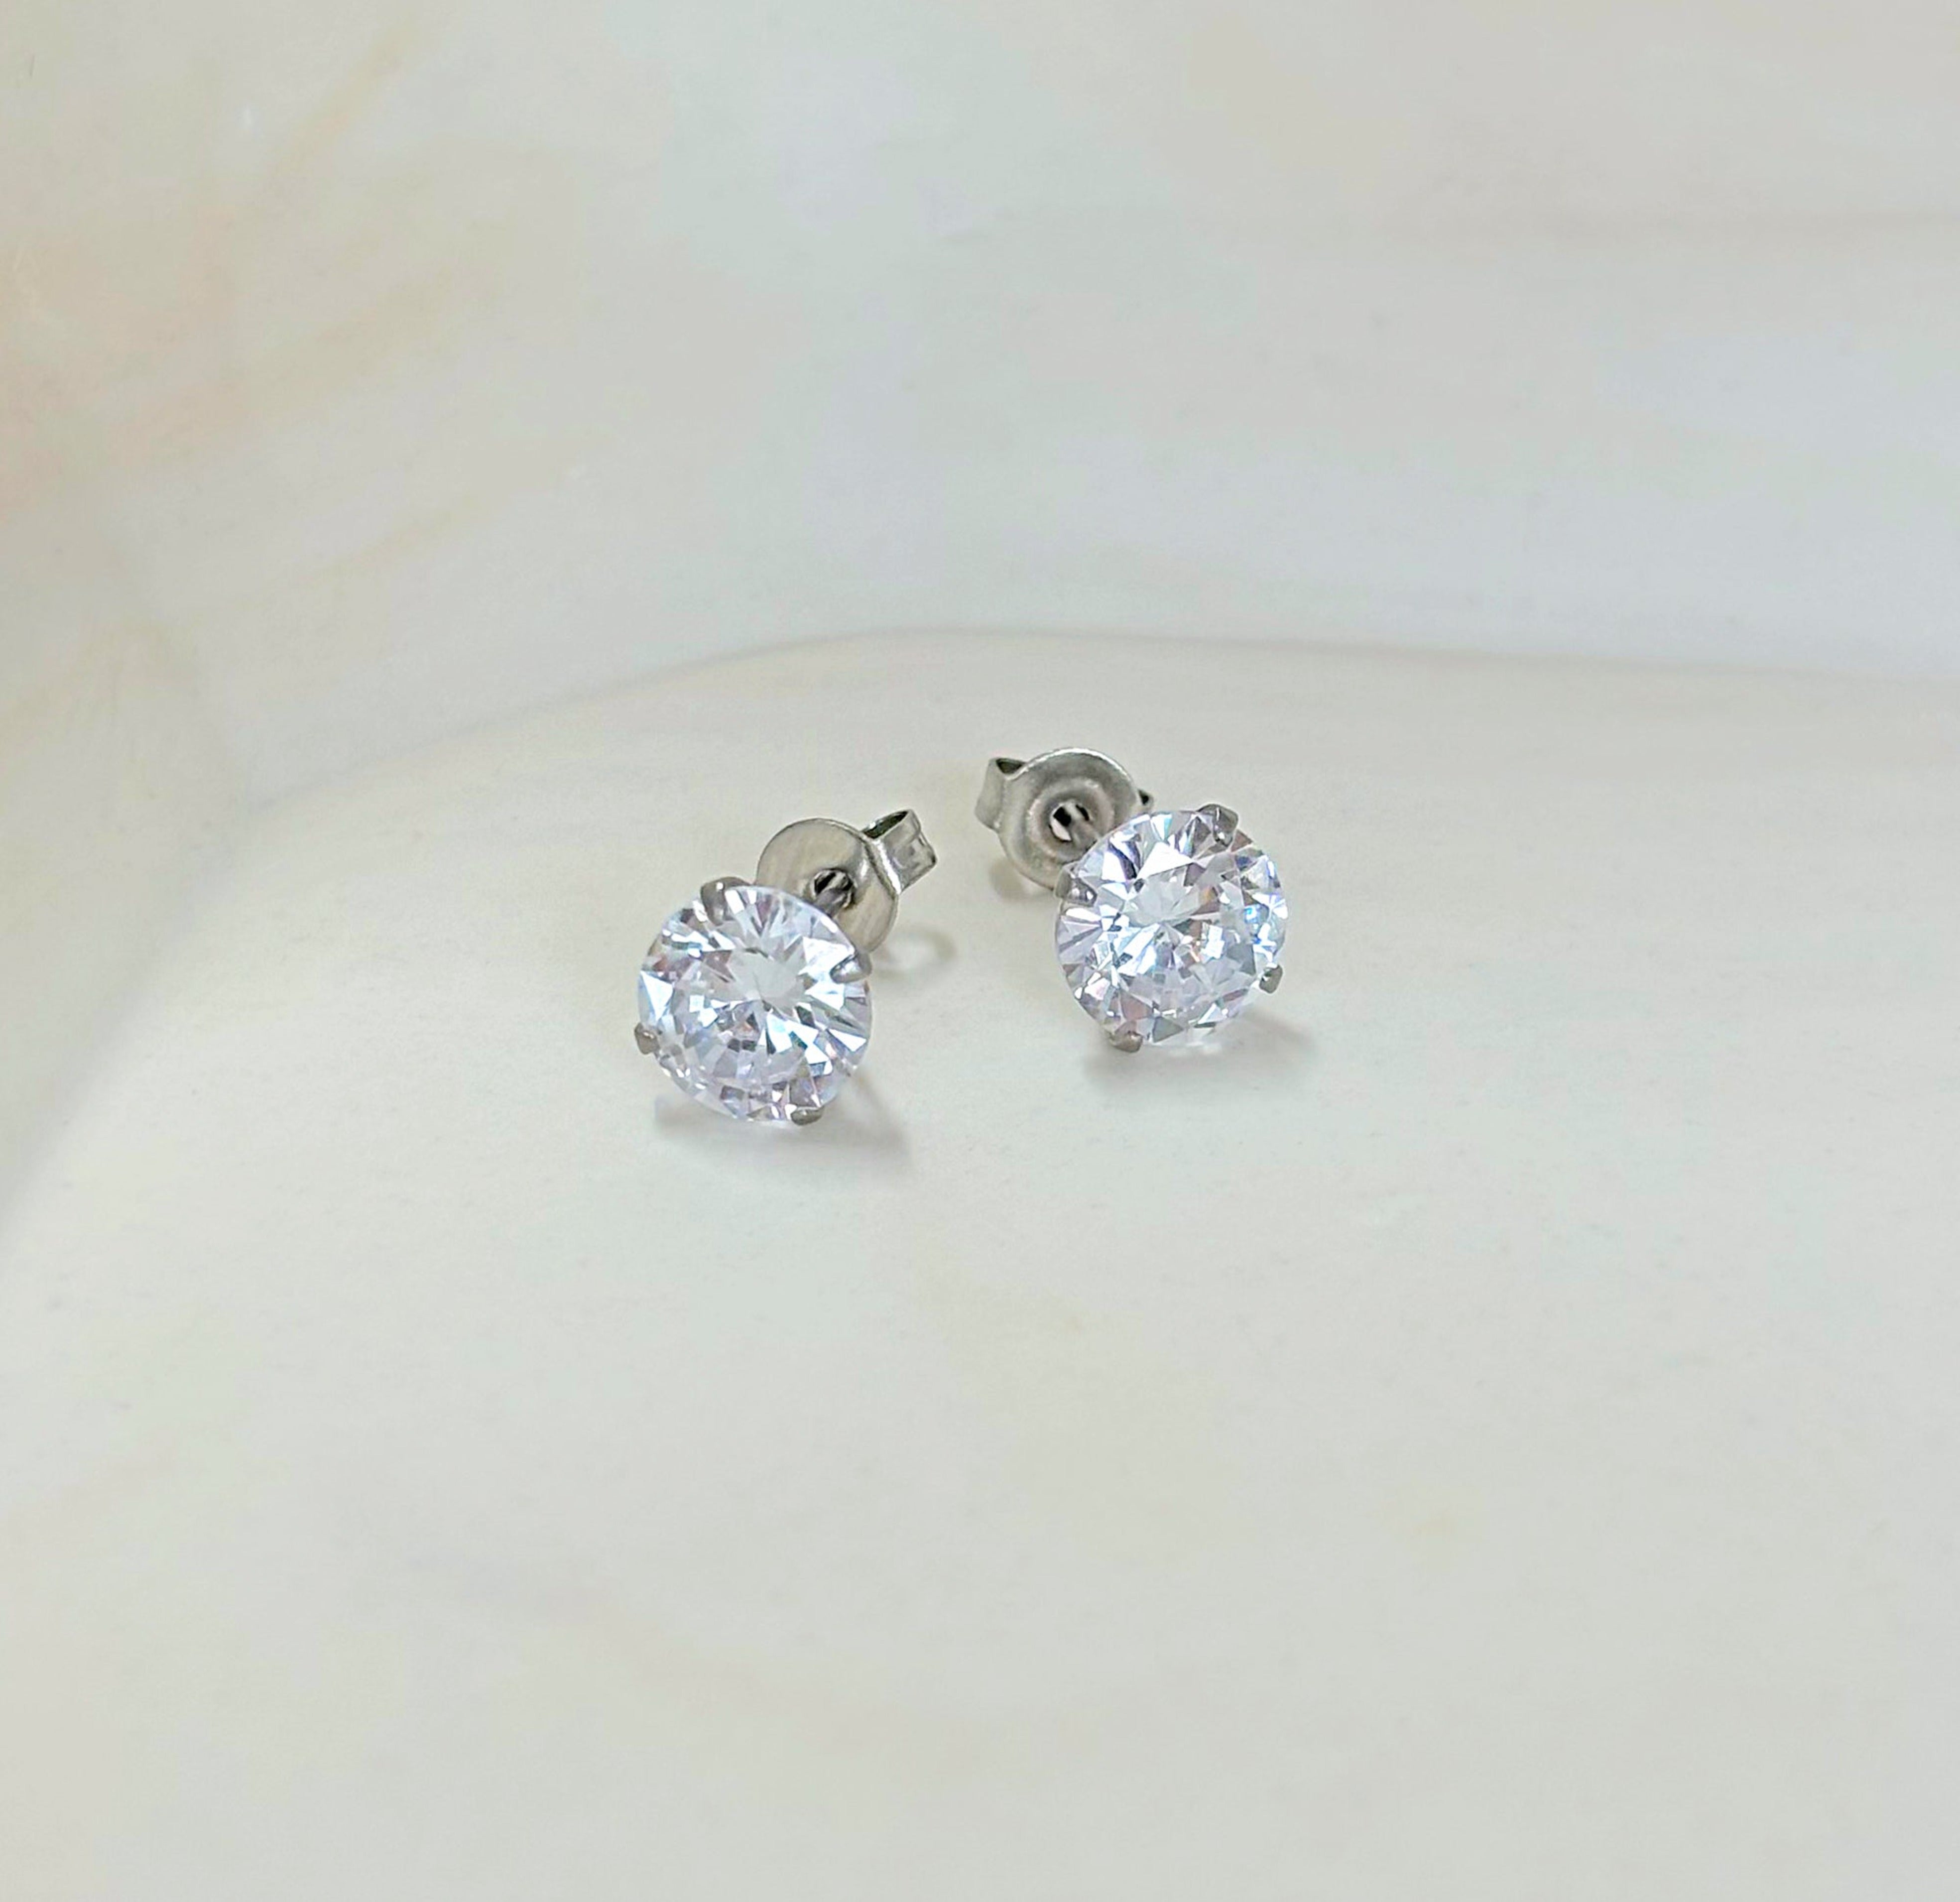 waterproof earrings diamond stud earrings